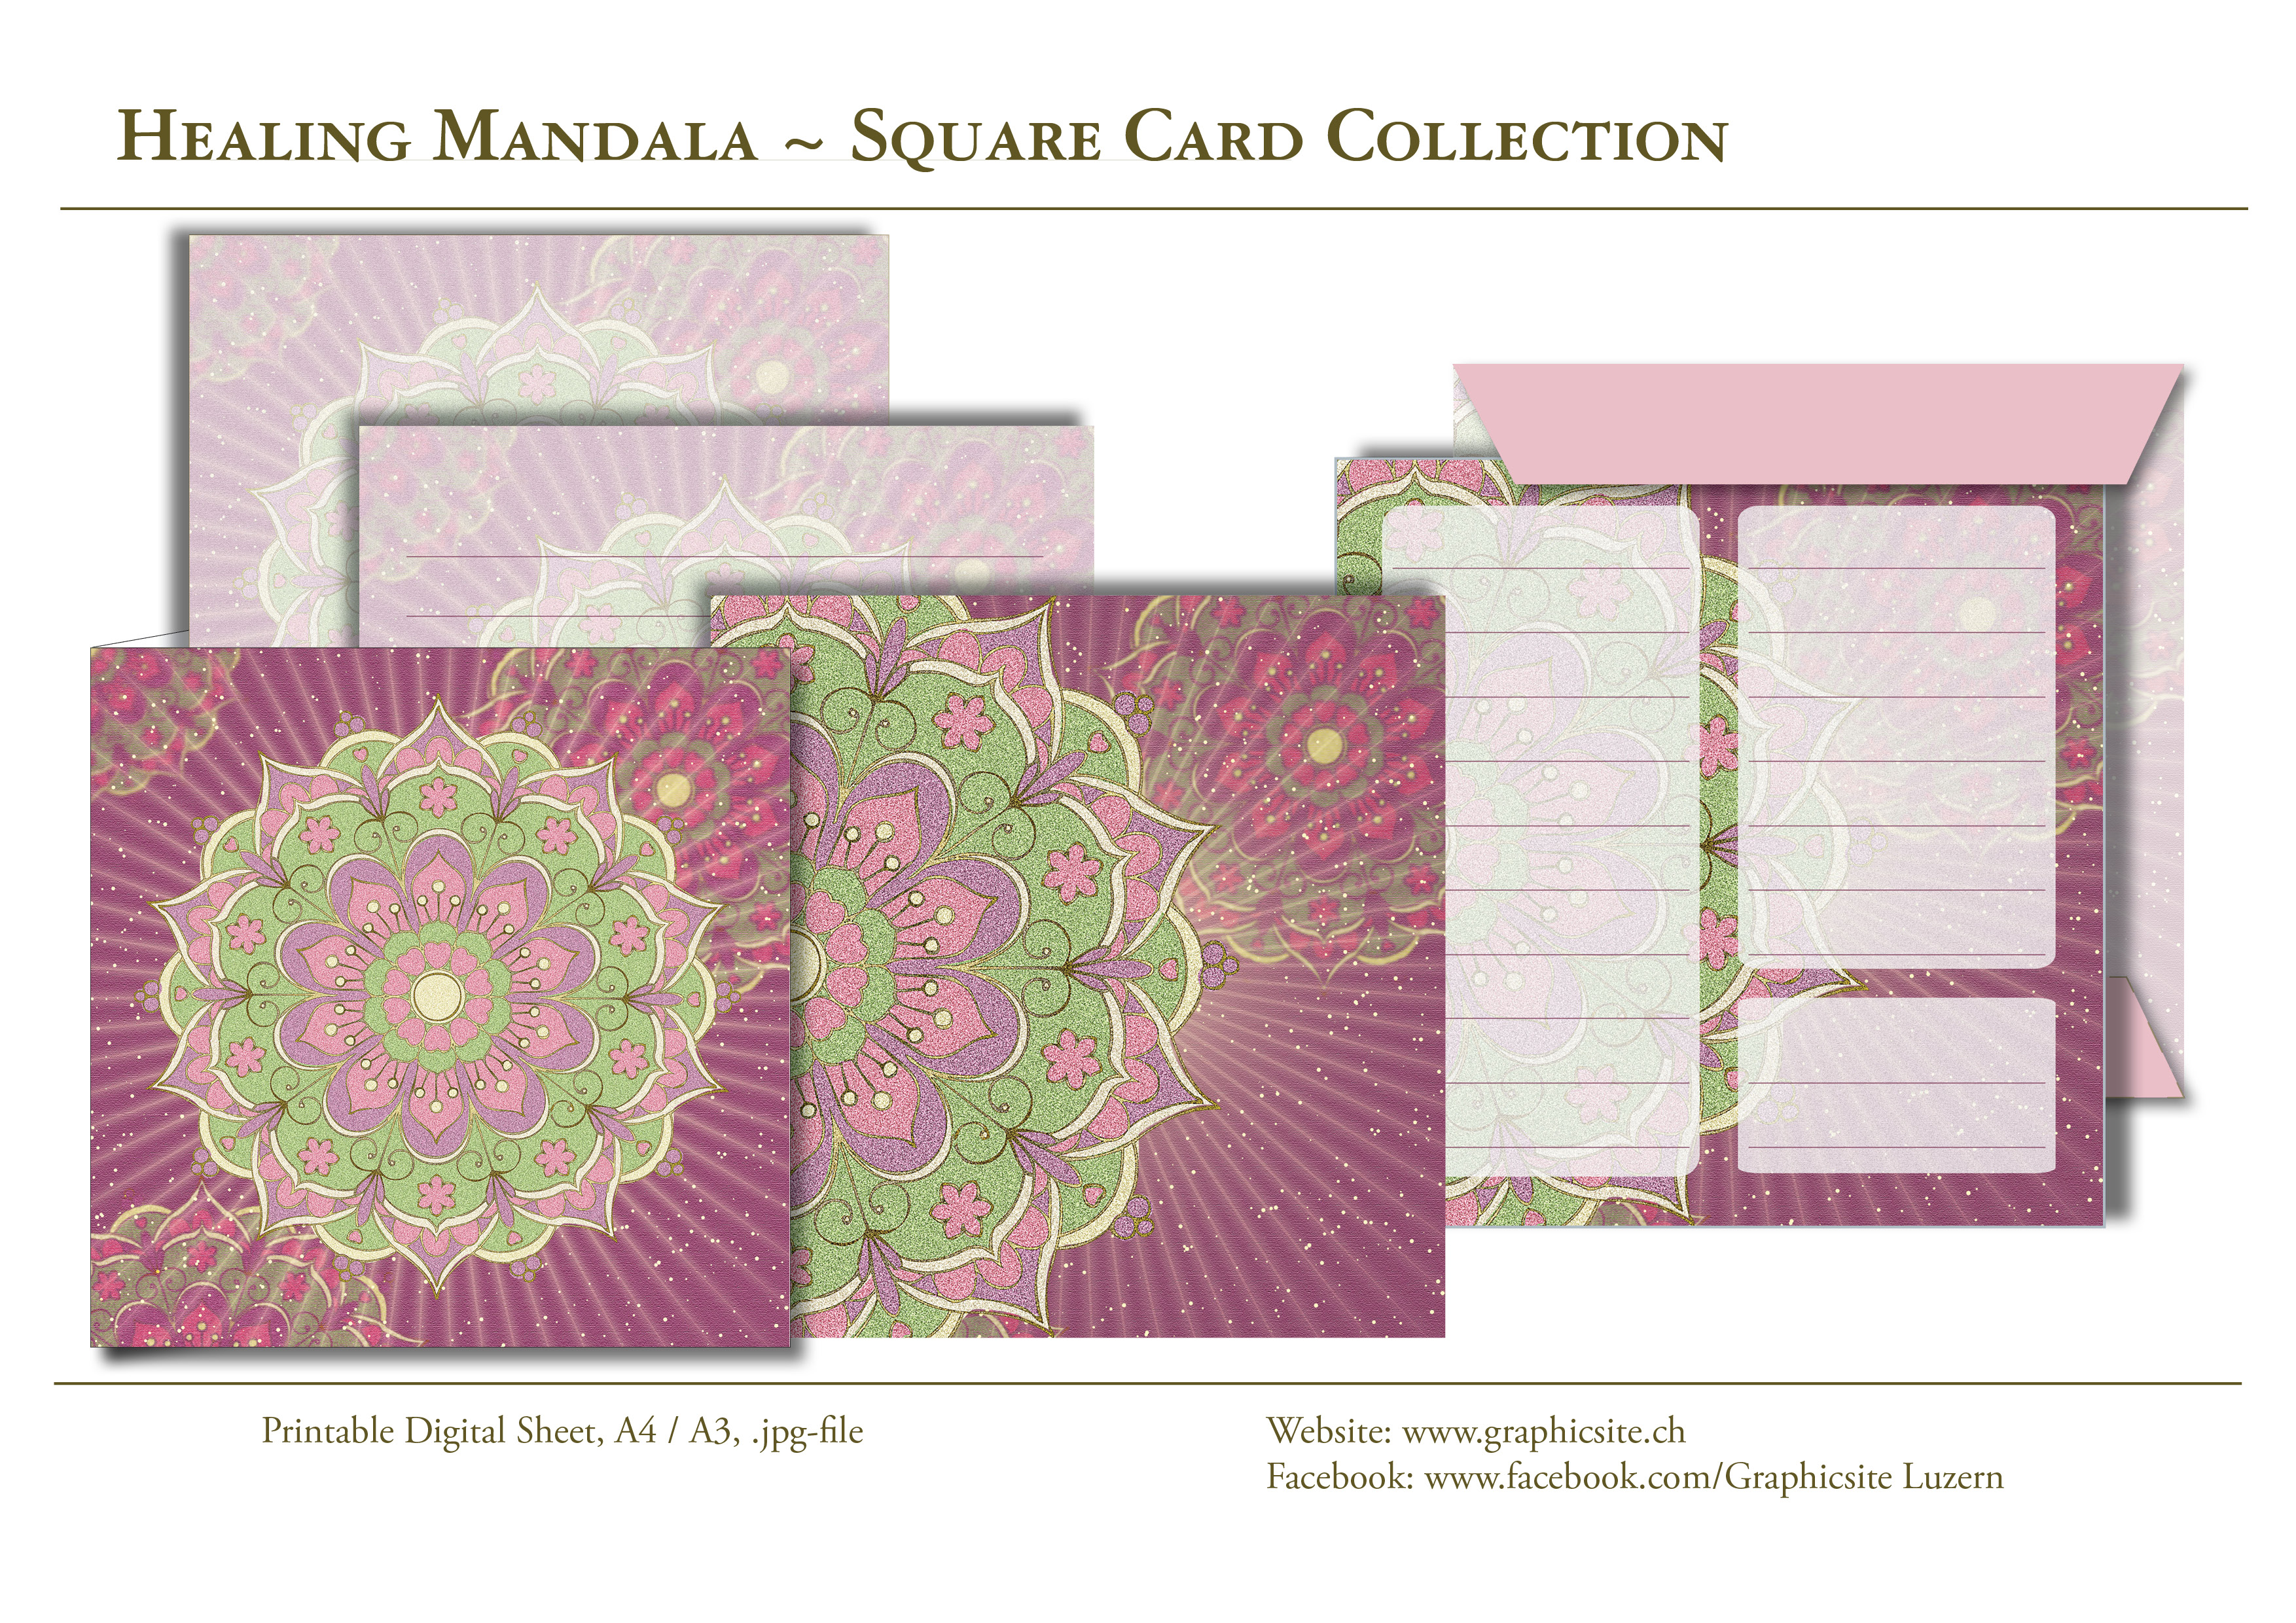 Printable Digital Sheets, Square Cards, Healing, Mandala, Flower, Cards, Graphic Design, Luzern,